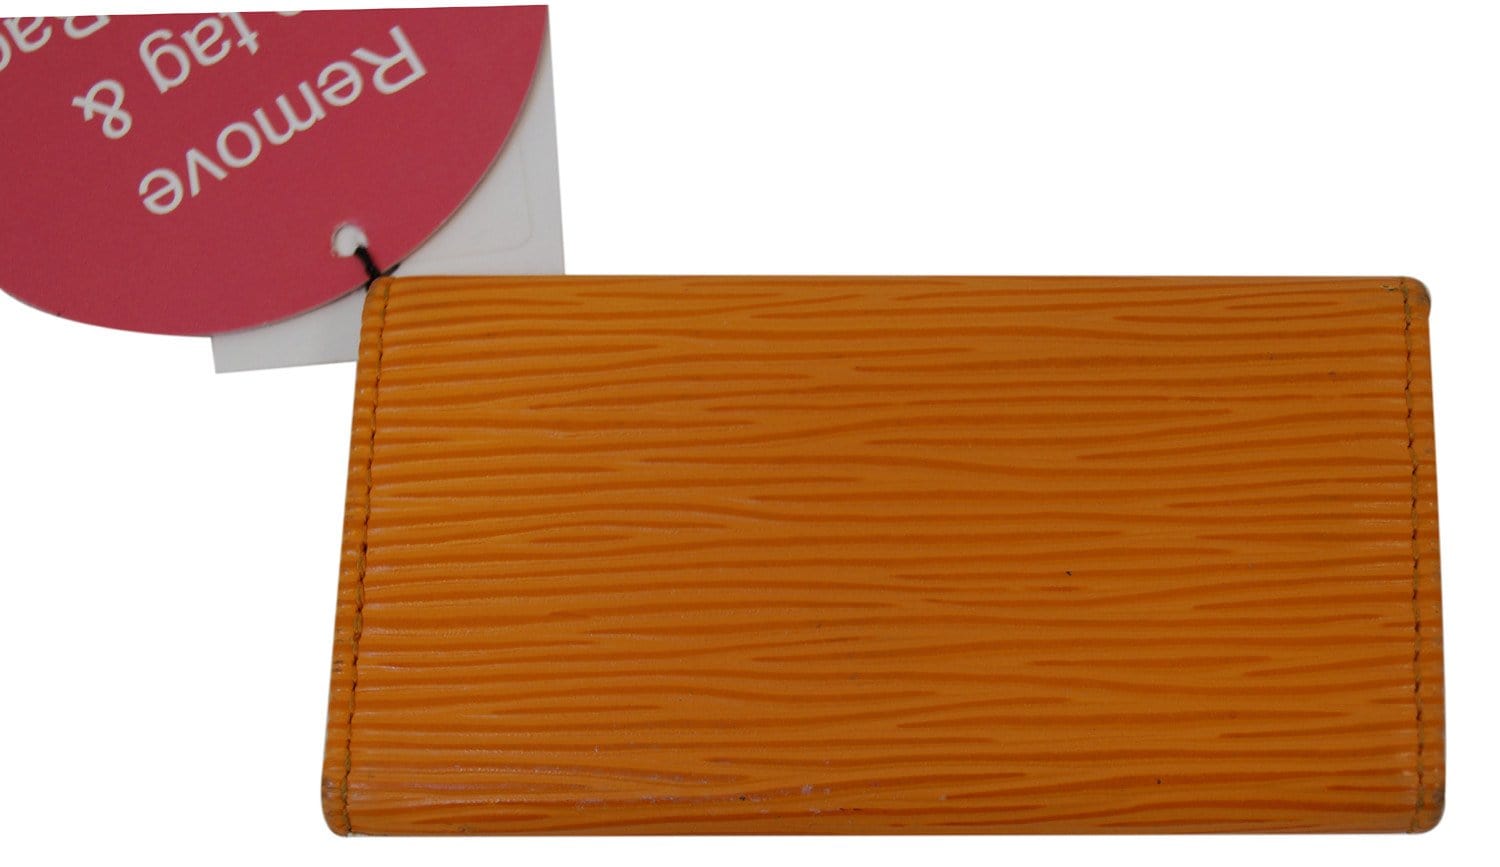 Louis Vuitton Empty Gift Box Orange Authentic USED key case Side